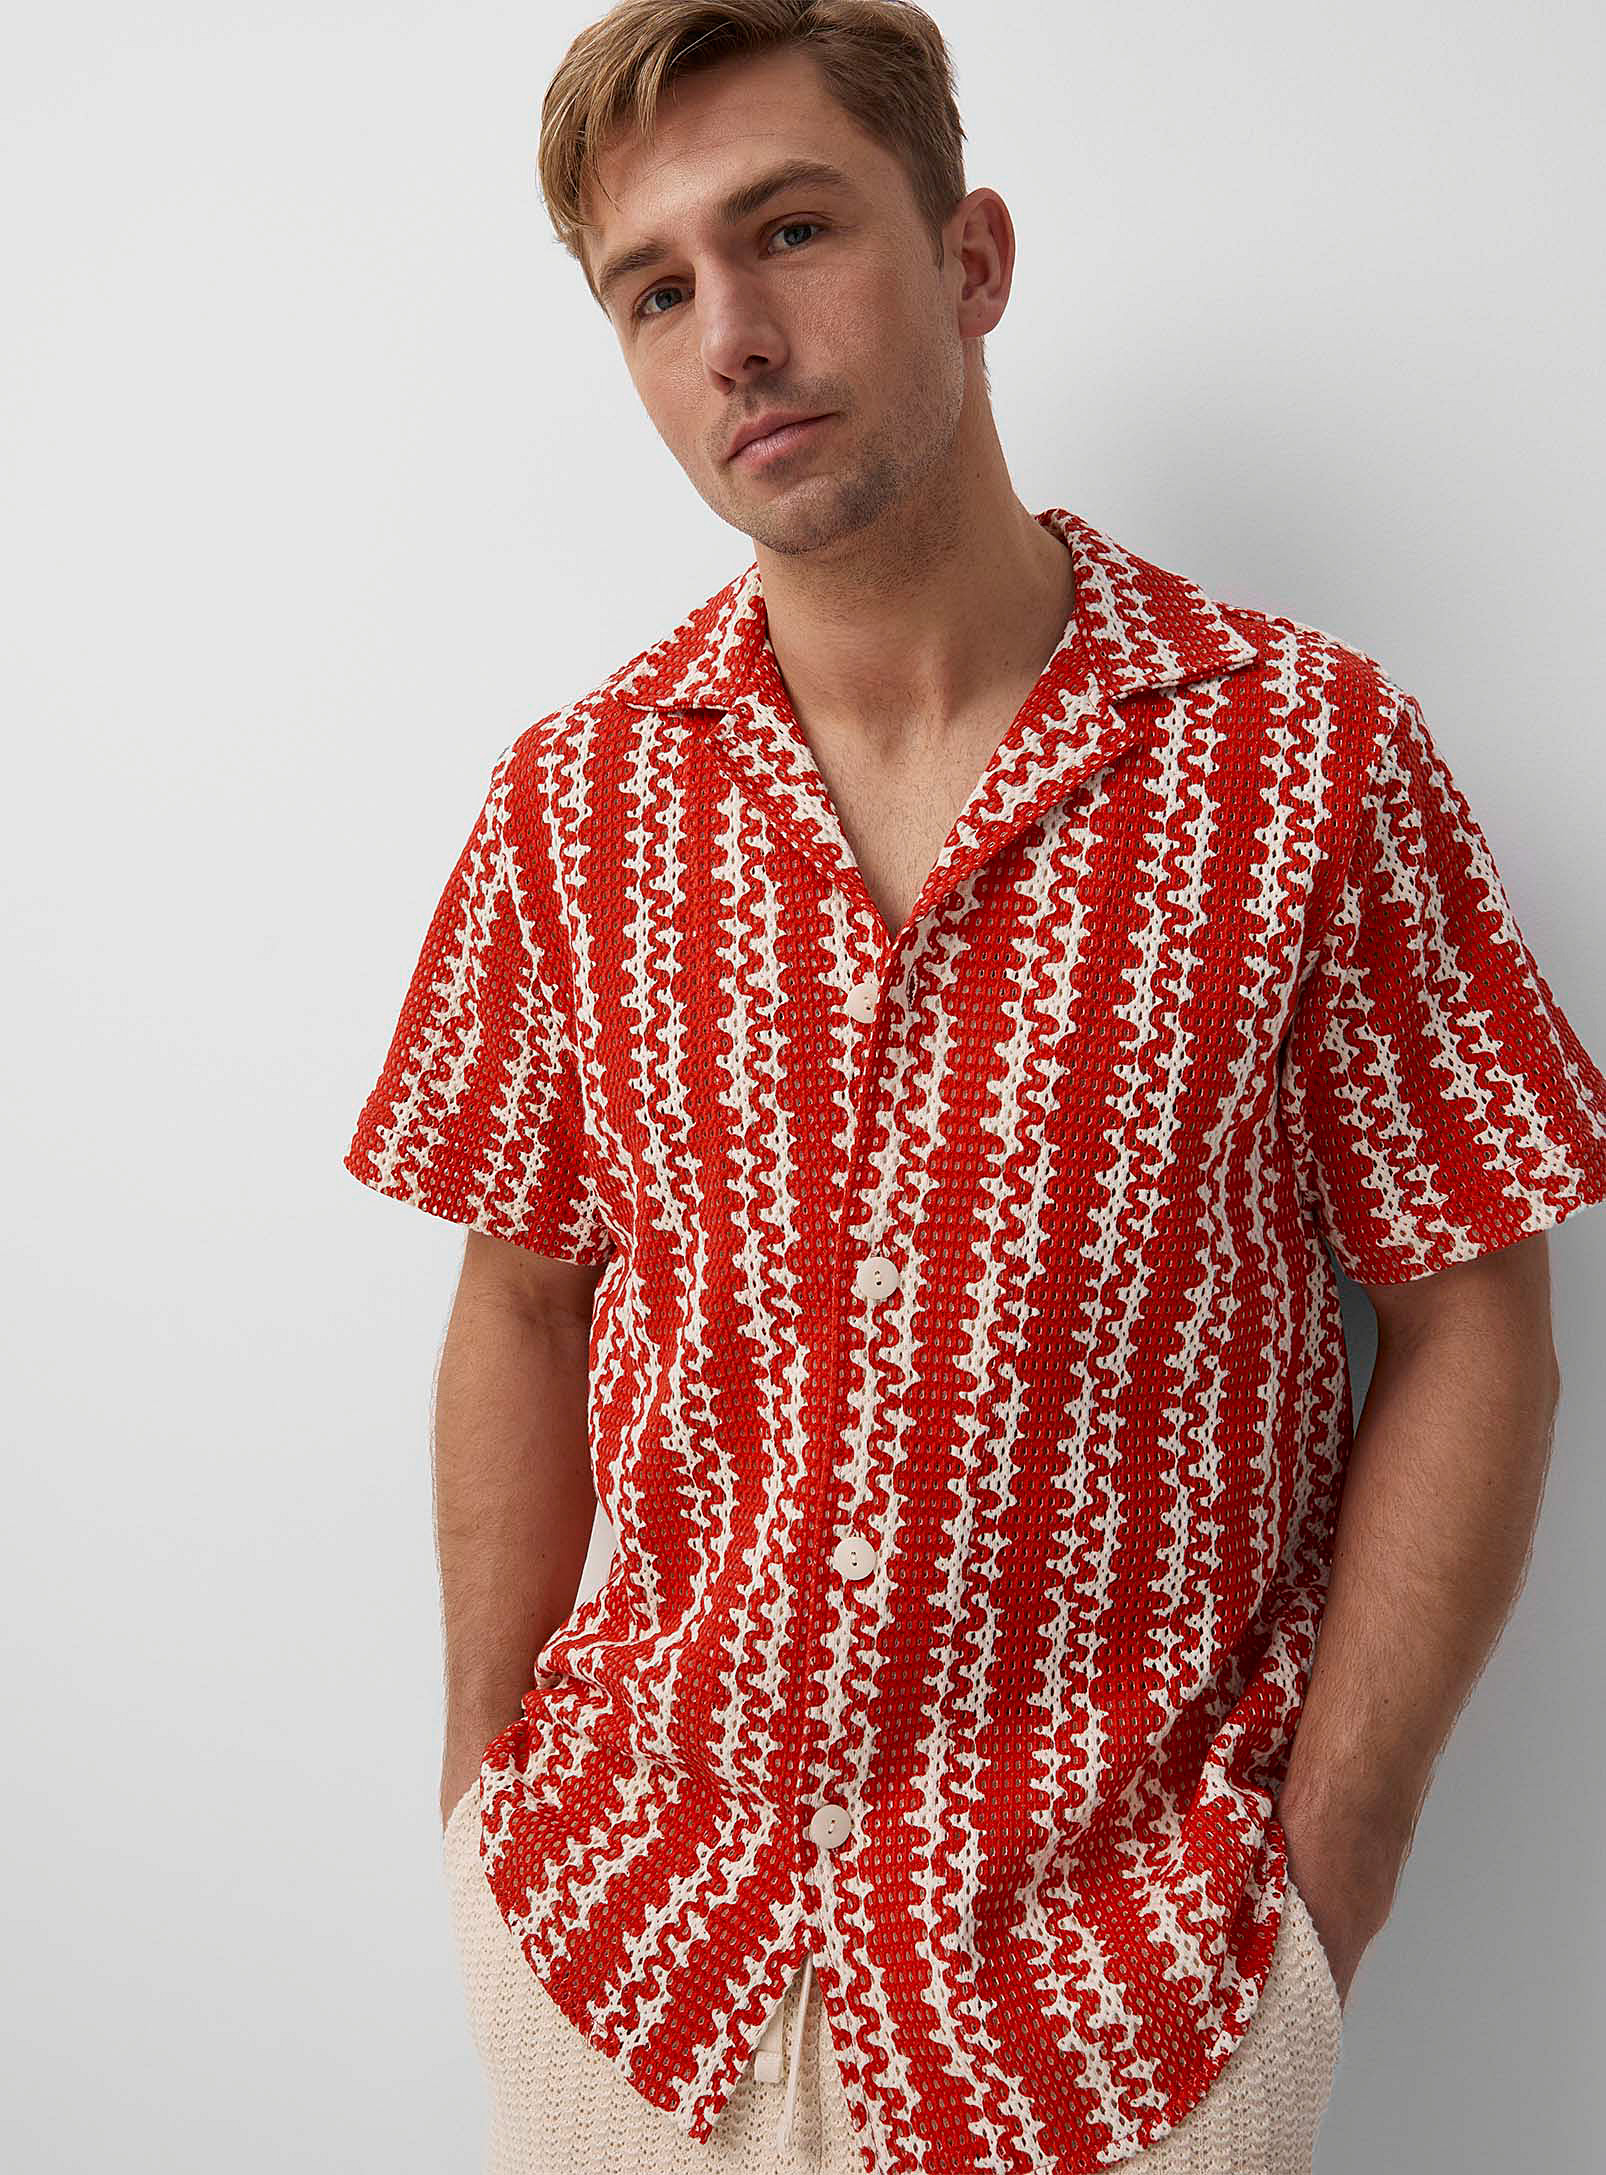 Oas - Men's Wavy-stripe printed knit shirt